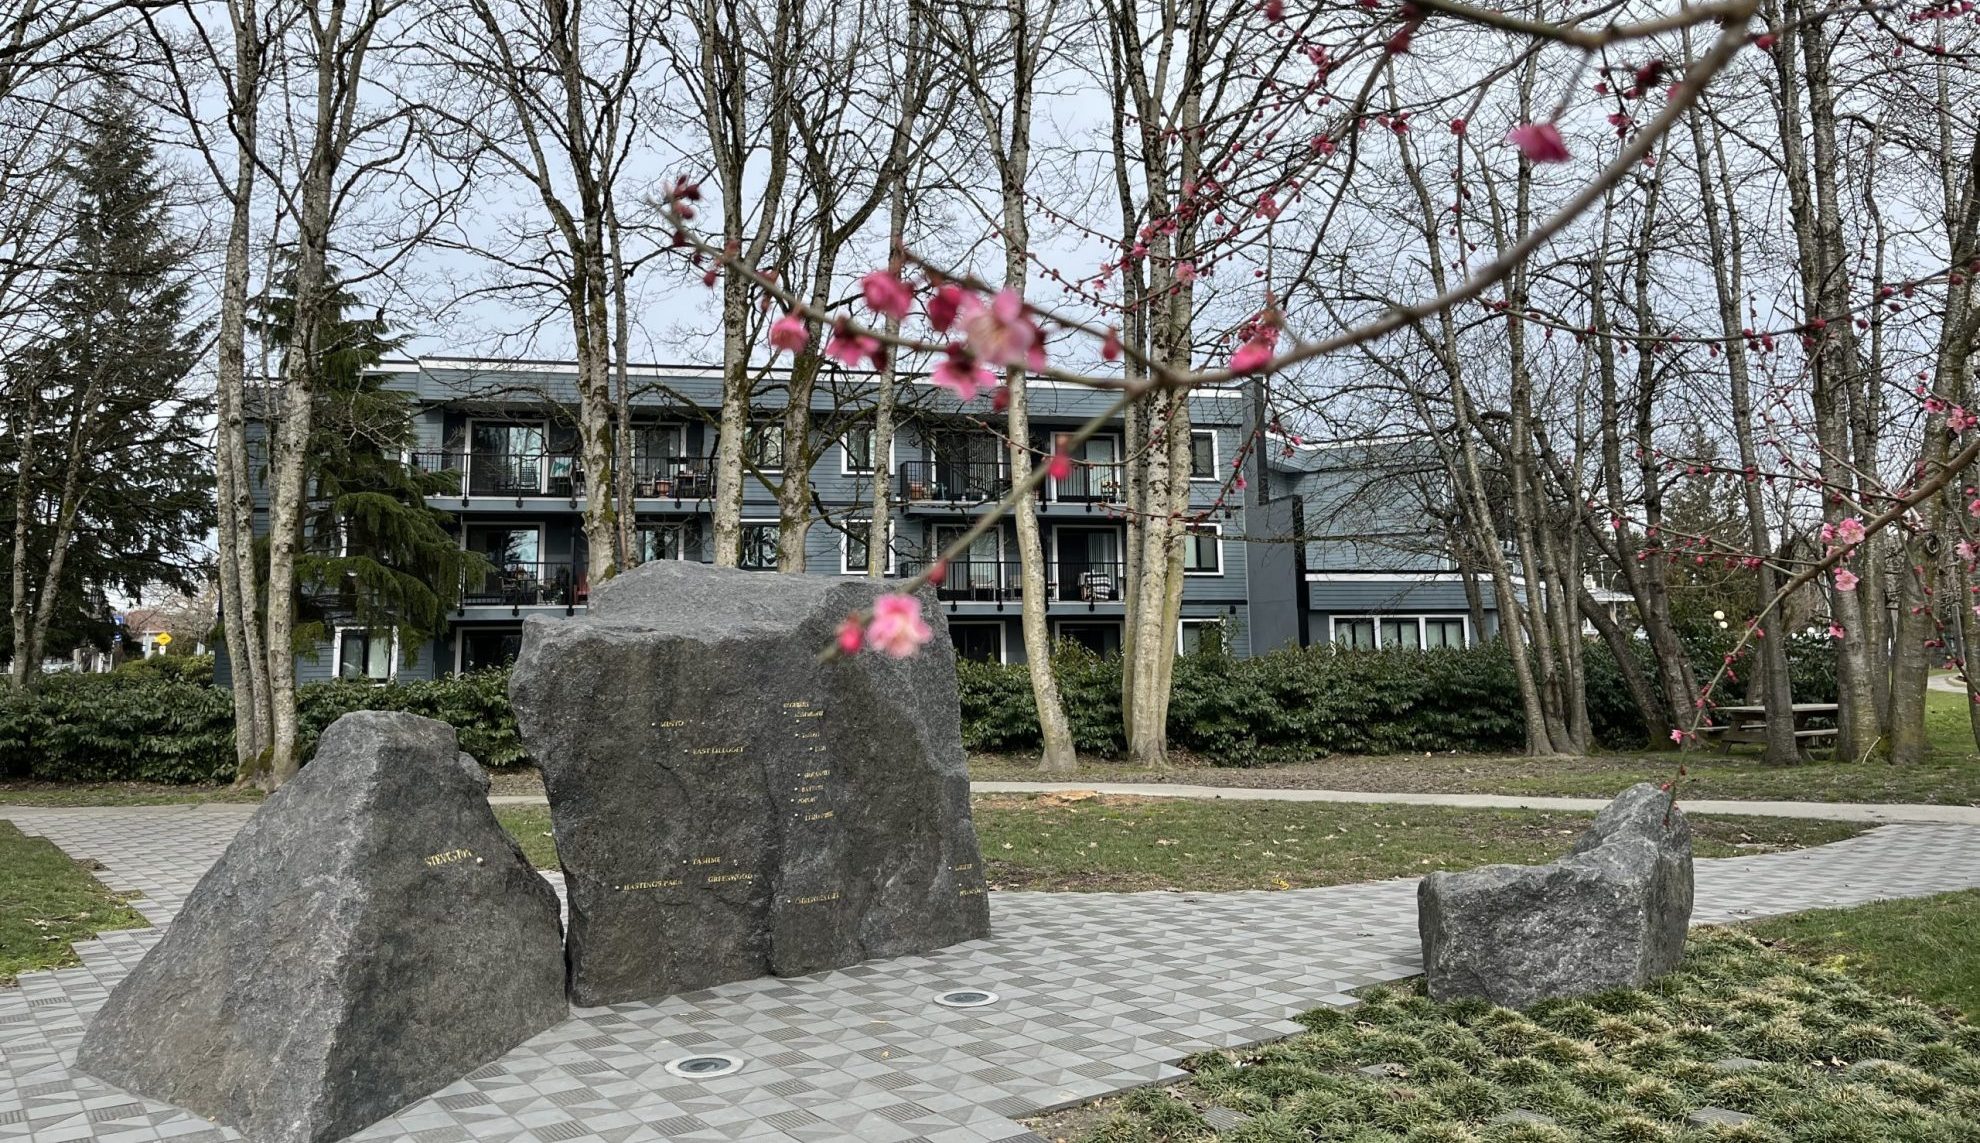 Plum blossoms bloom in front of the granite sculptures in the Steveston Nikkei Memorial park